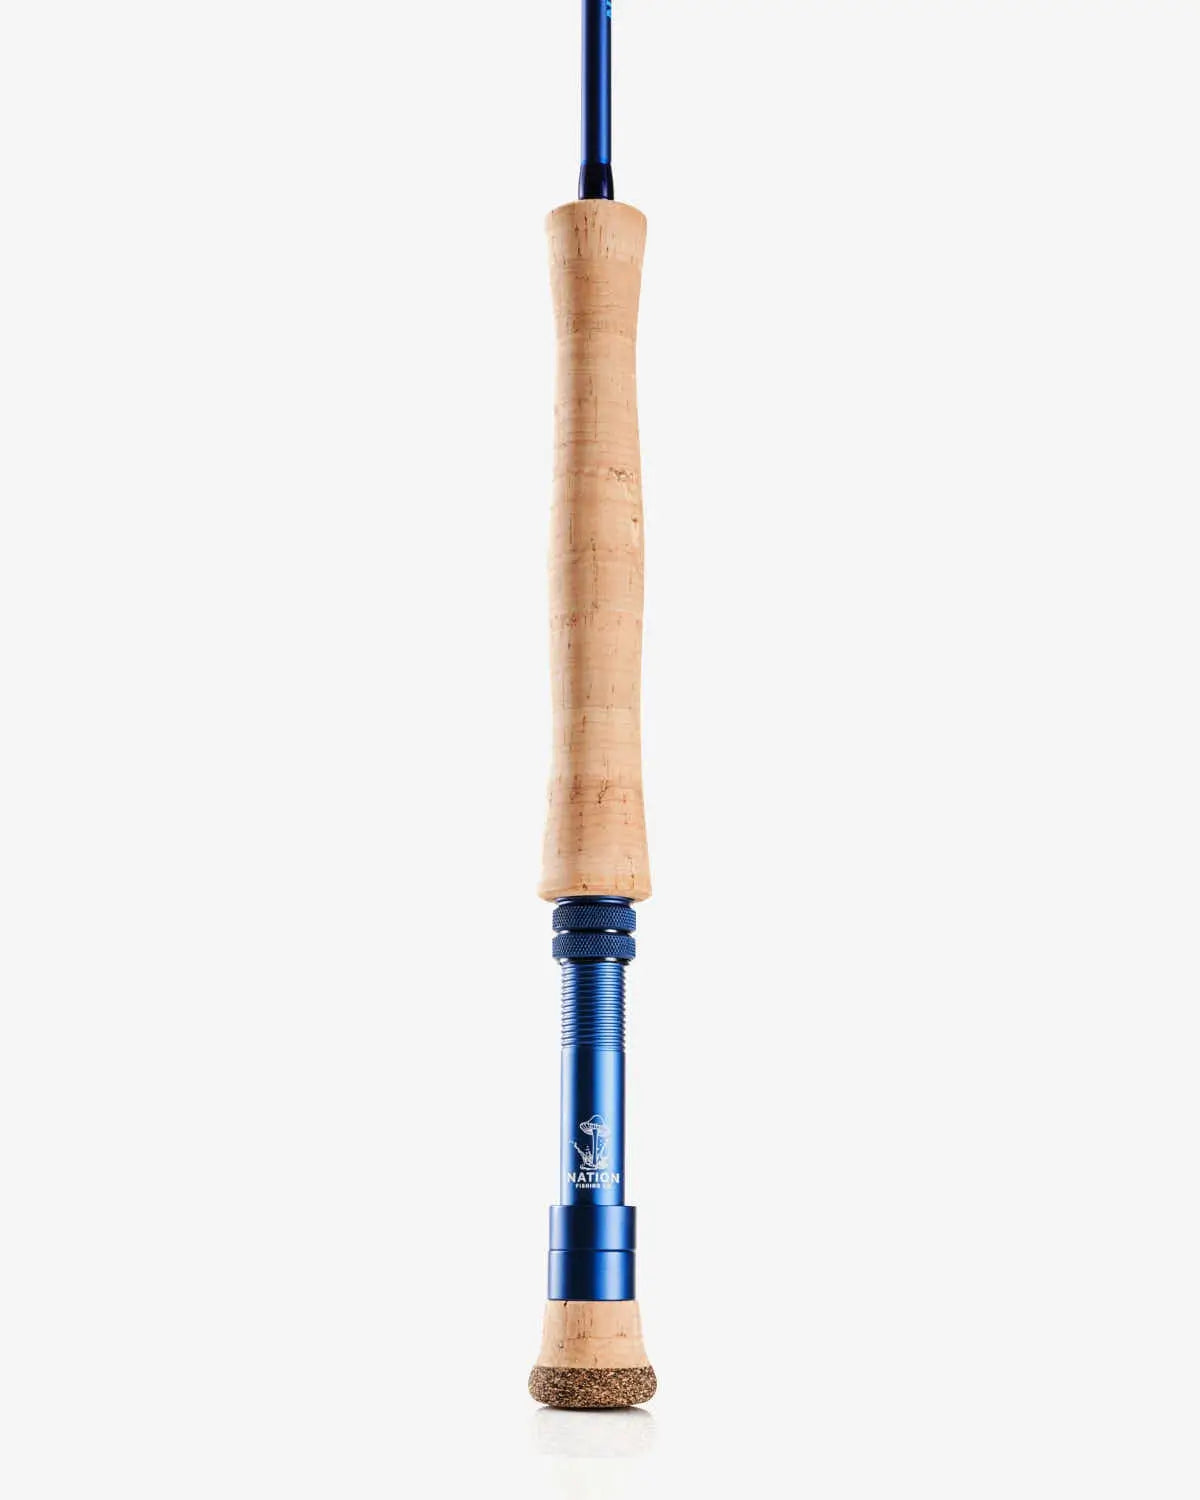 The Nymph Rod 10' - 4WT - 6 Piece